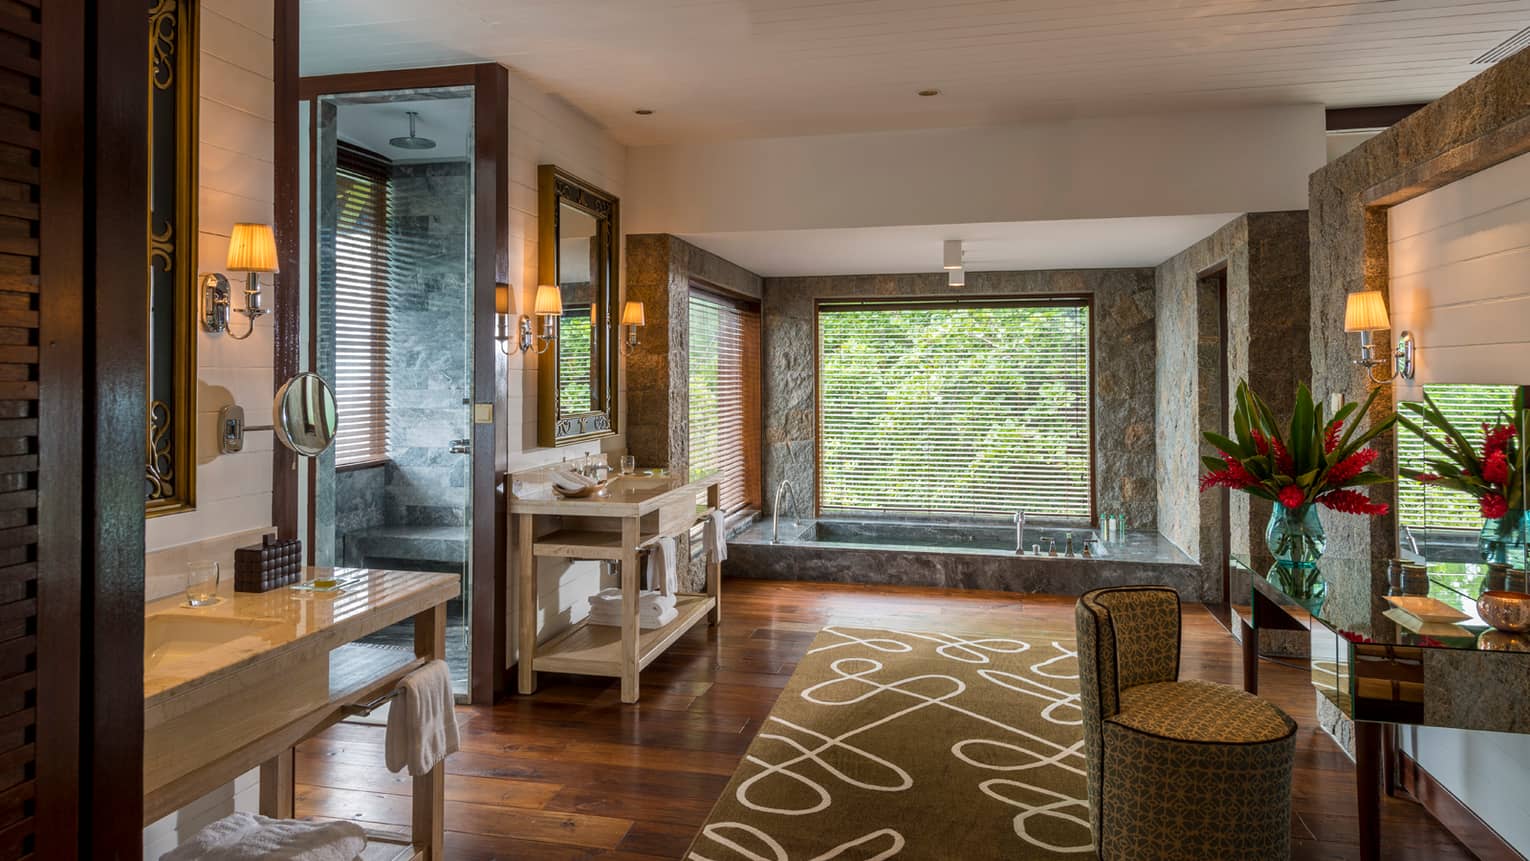 Four-Bedroom Residence Villa large bathroom with walk-in rain shower, sunken marble tub by window